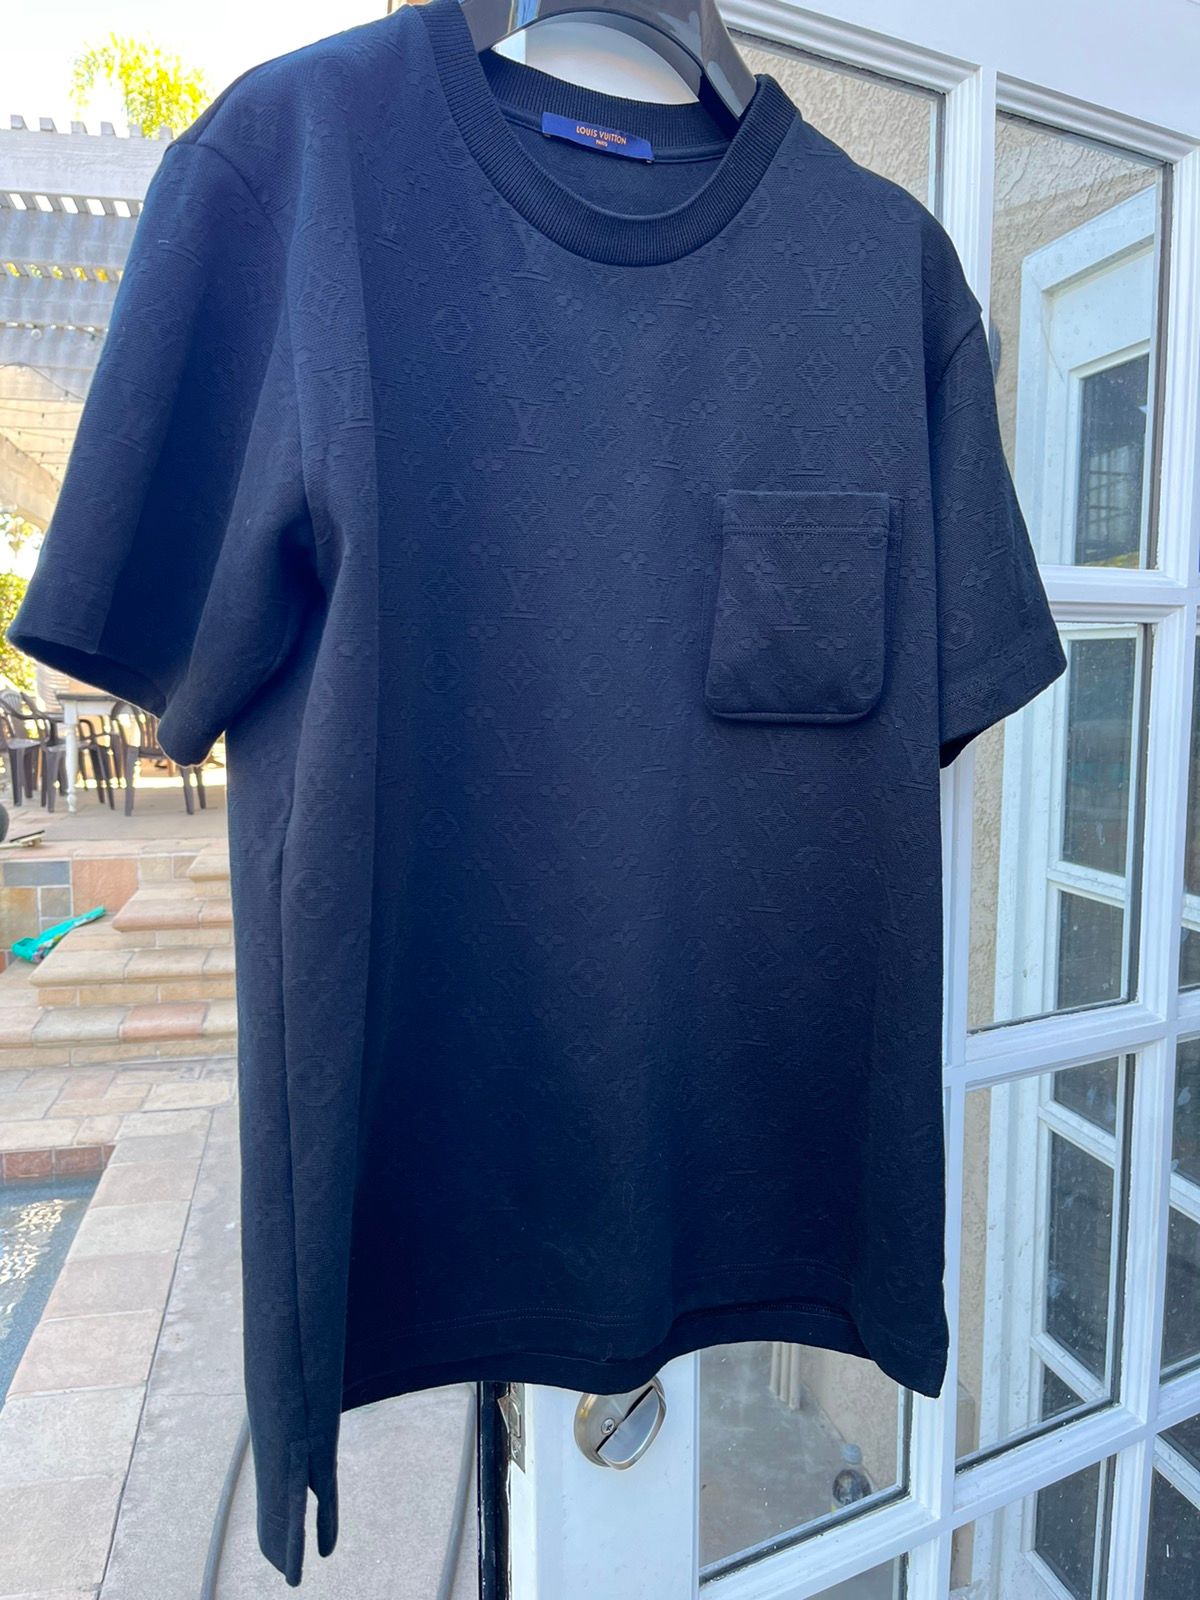 Louis Vuitton Signature 3D Pocket Monogram T-Shirt, Black, L (Stock Confirmation Required)